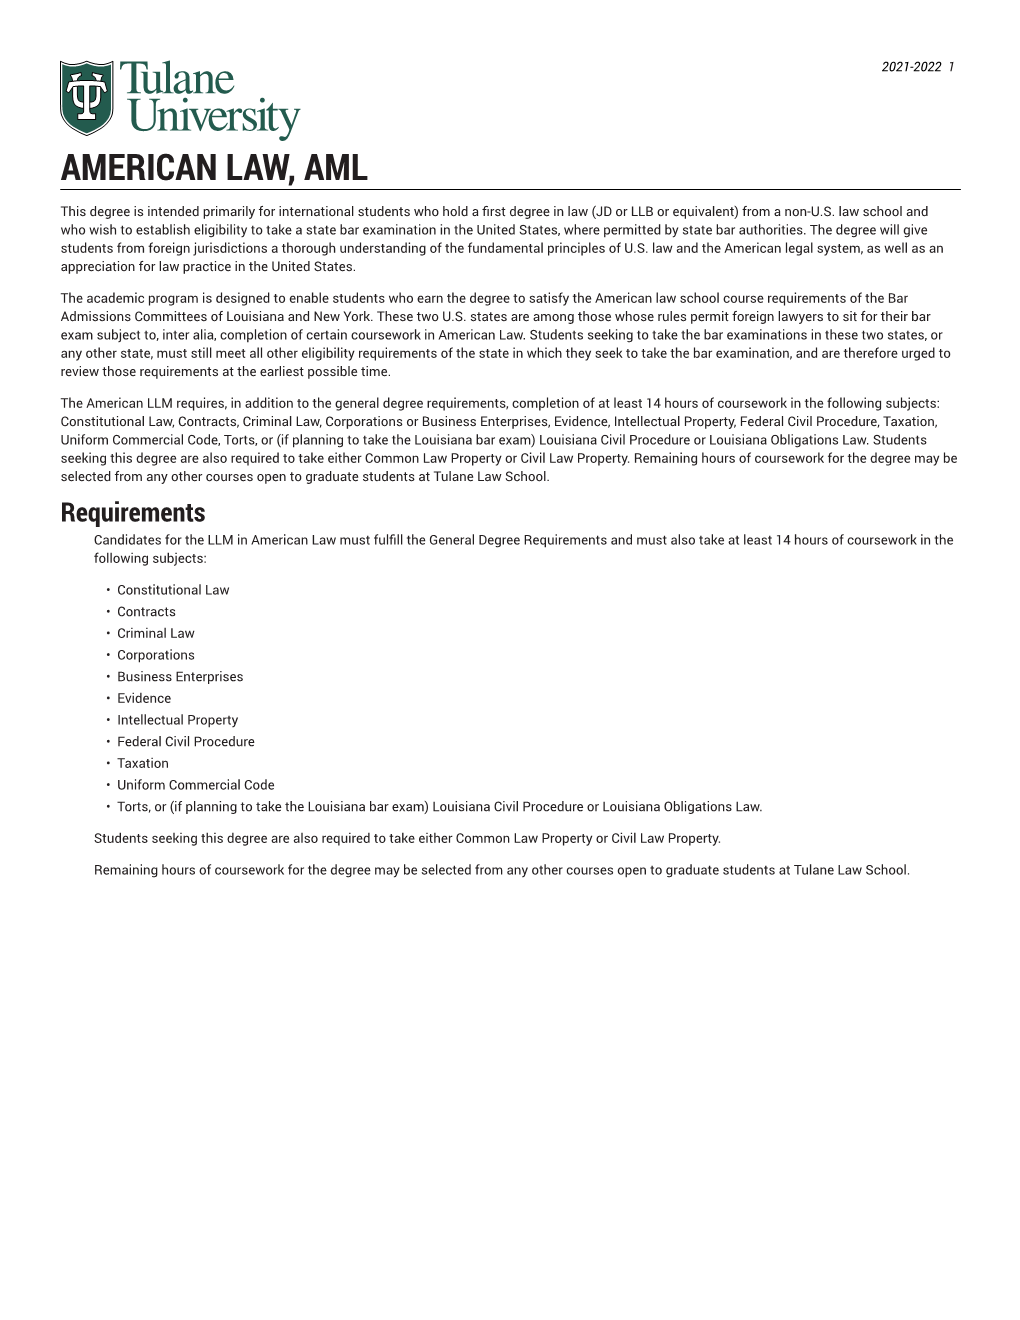 American Law, Aml